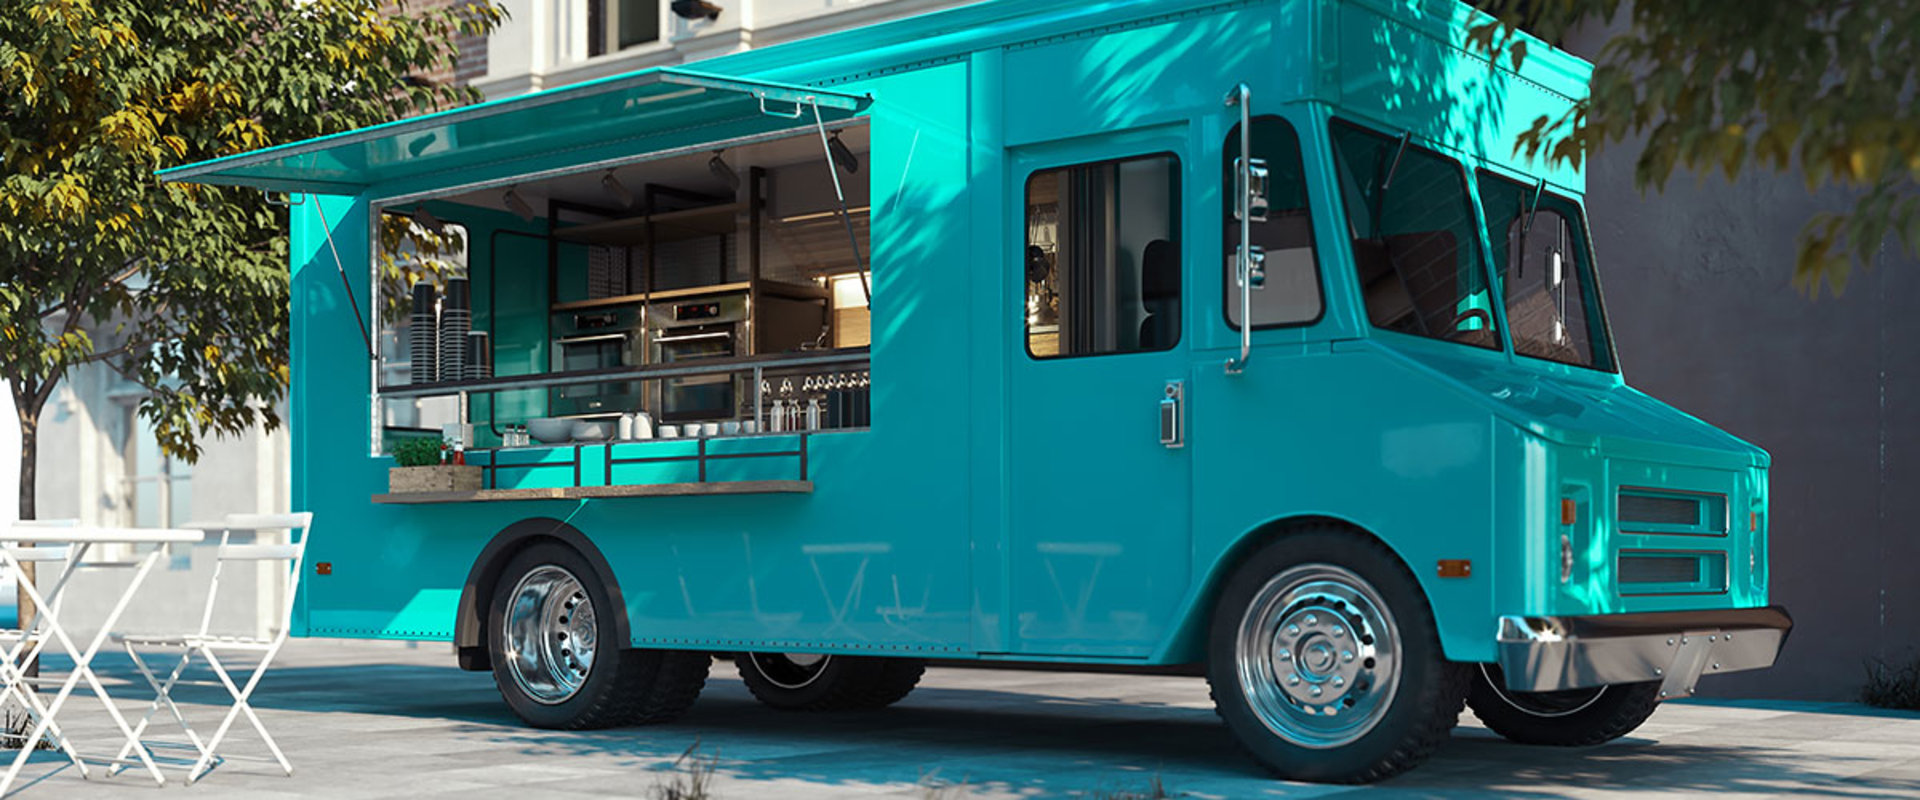 The Best Food Trucks in Philadelphia, Pennsylvania: A Guide